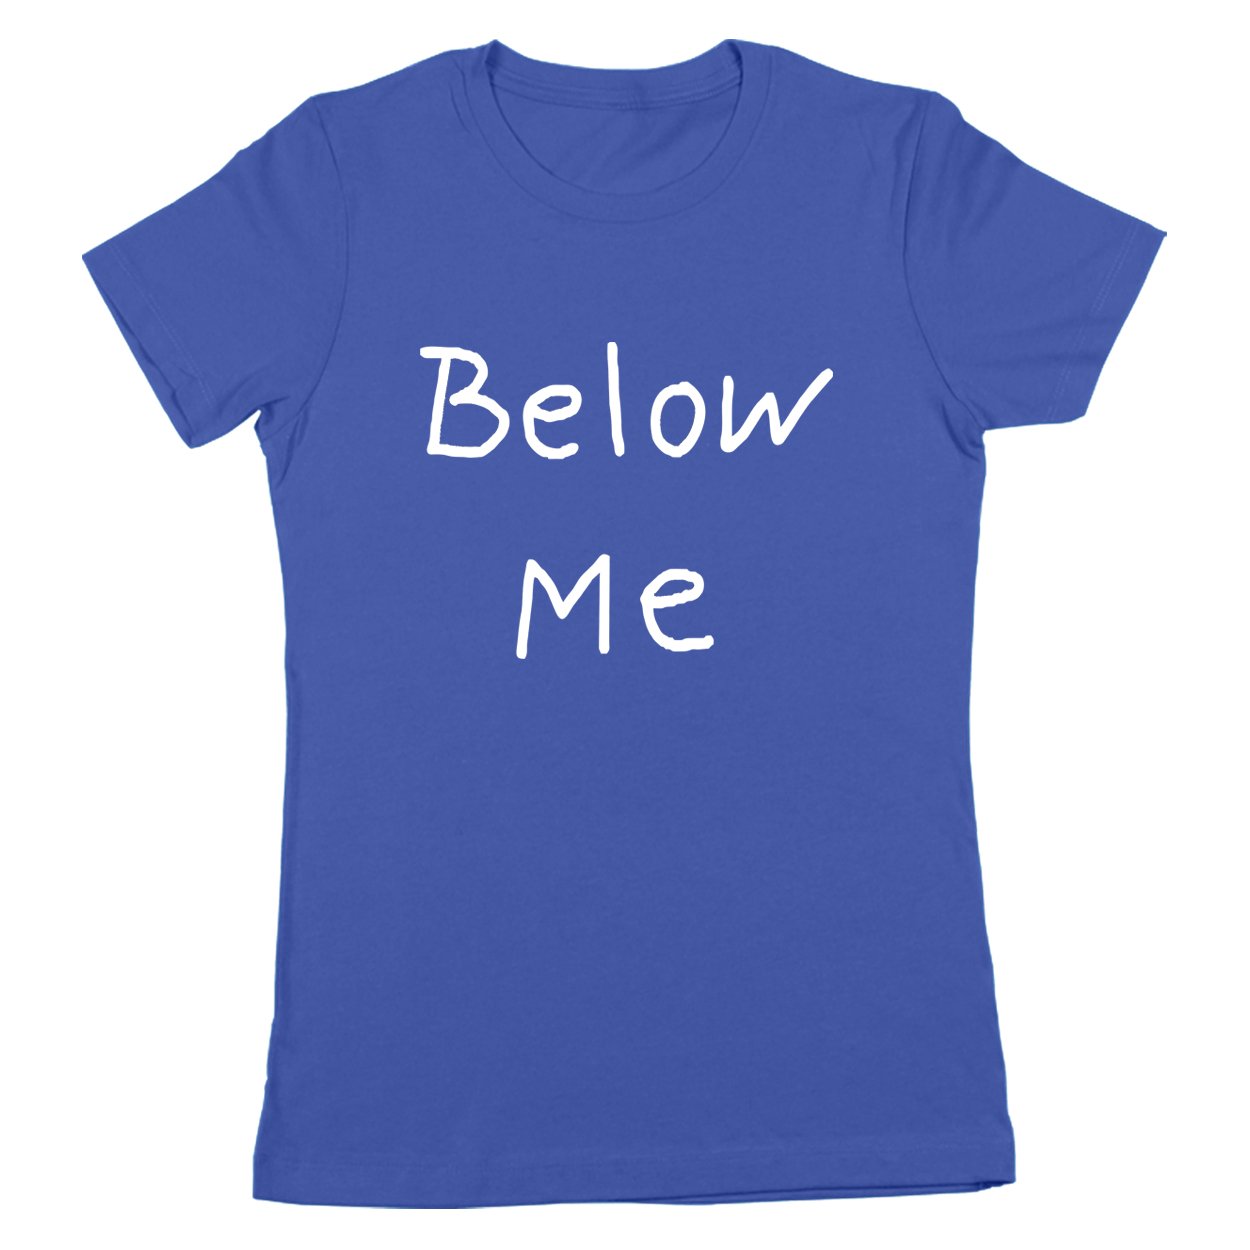 Below Me Women's Fit T-Shirt